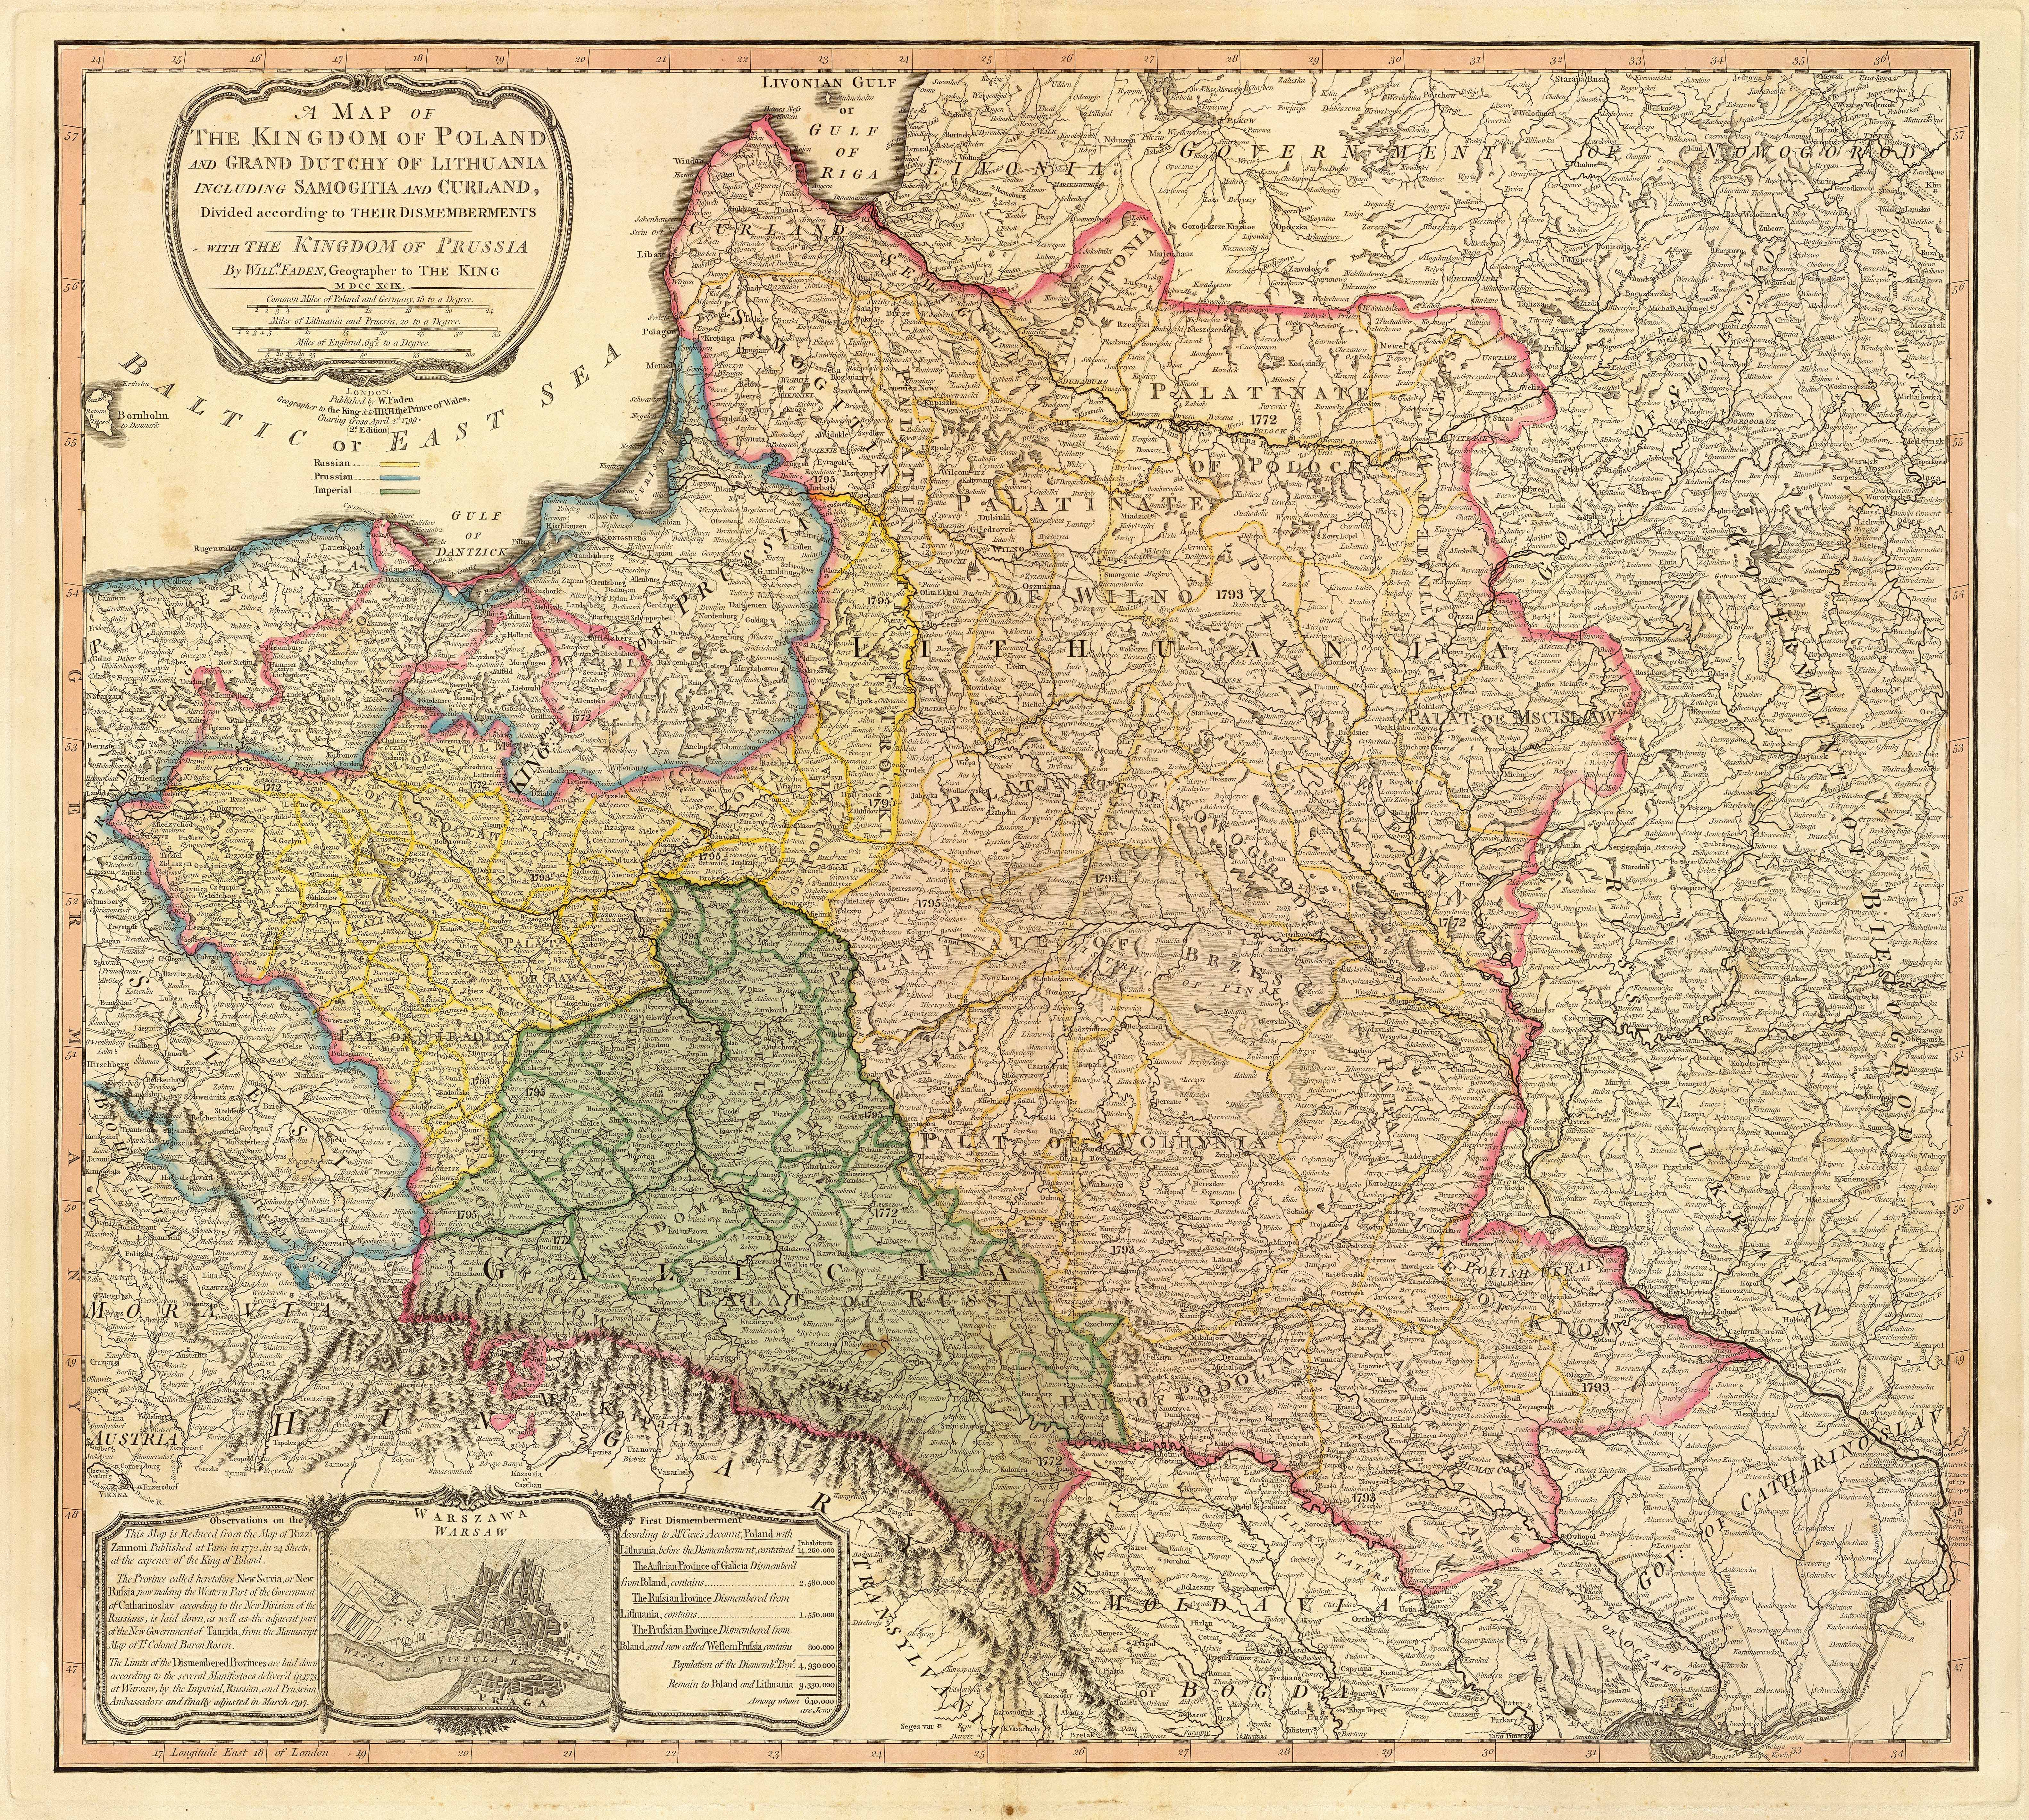 Mapy Polski1 - 1799 - POLSKA-LITWA.jpg